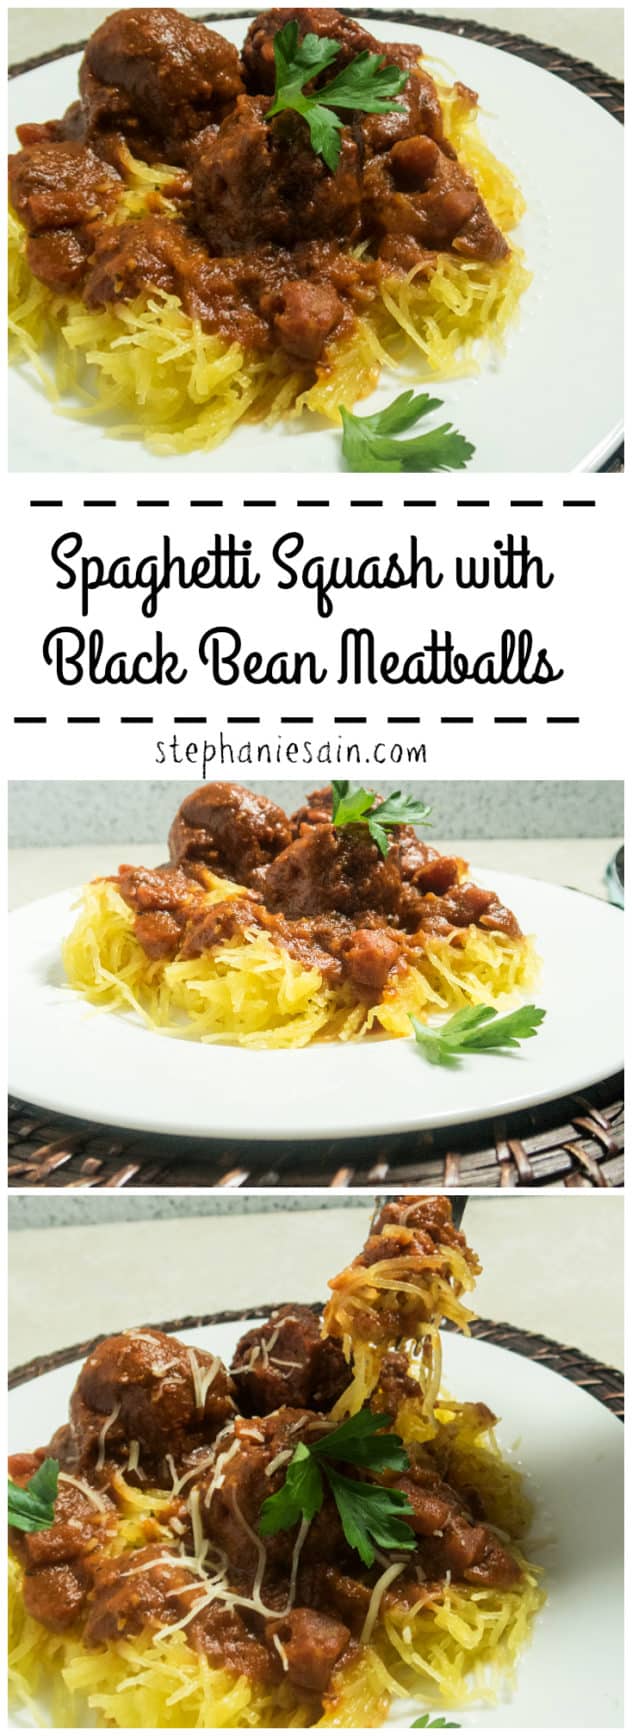 Spaghetti Squash with Black Bean Meatballs - Apples for CJ